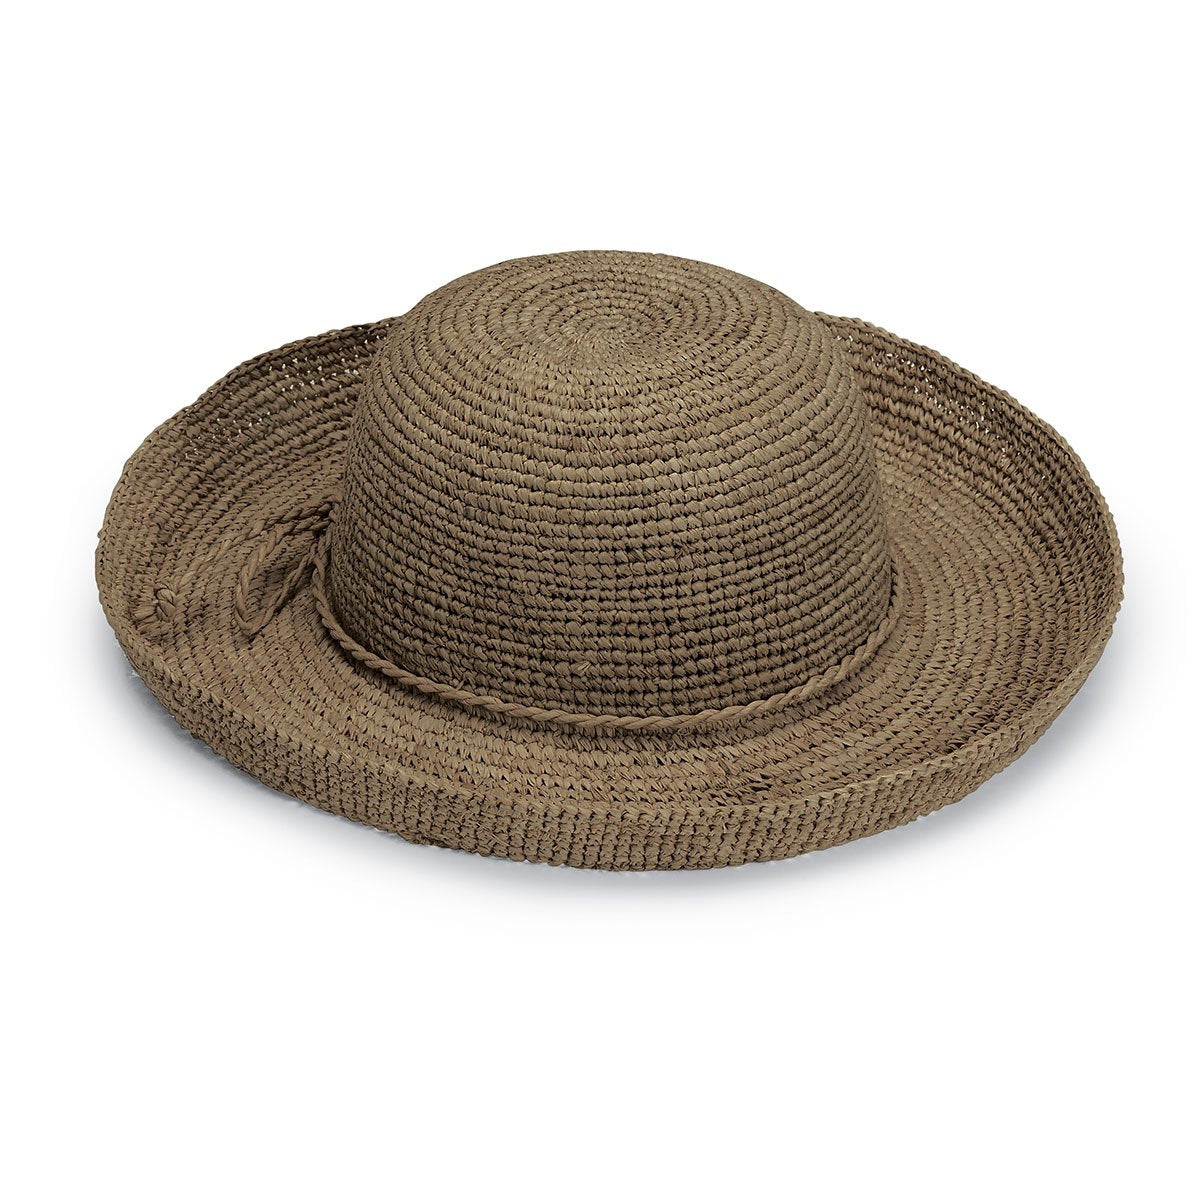 Featuring Catalina Big Wide Brim Crown Style Straw Sun Hat in Mushroom from Wallaroo